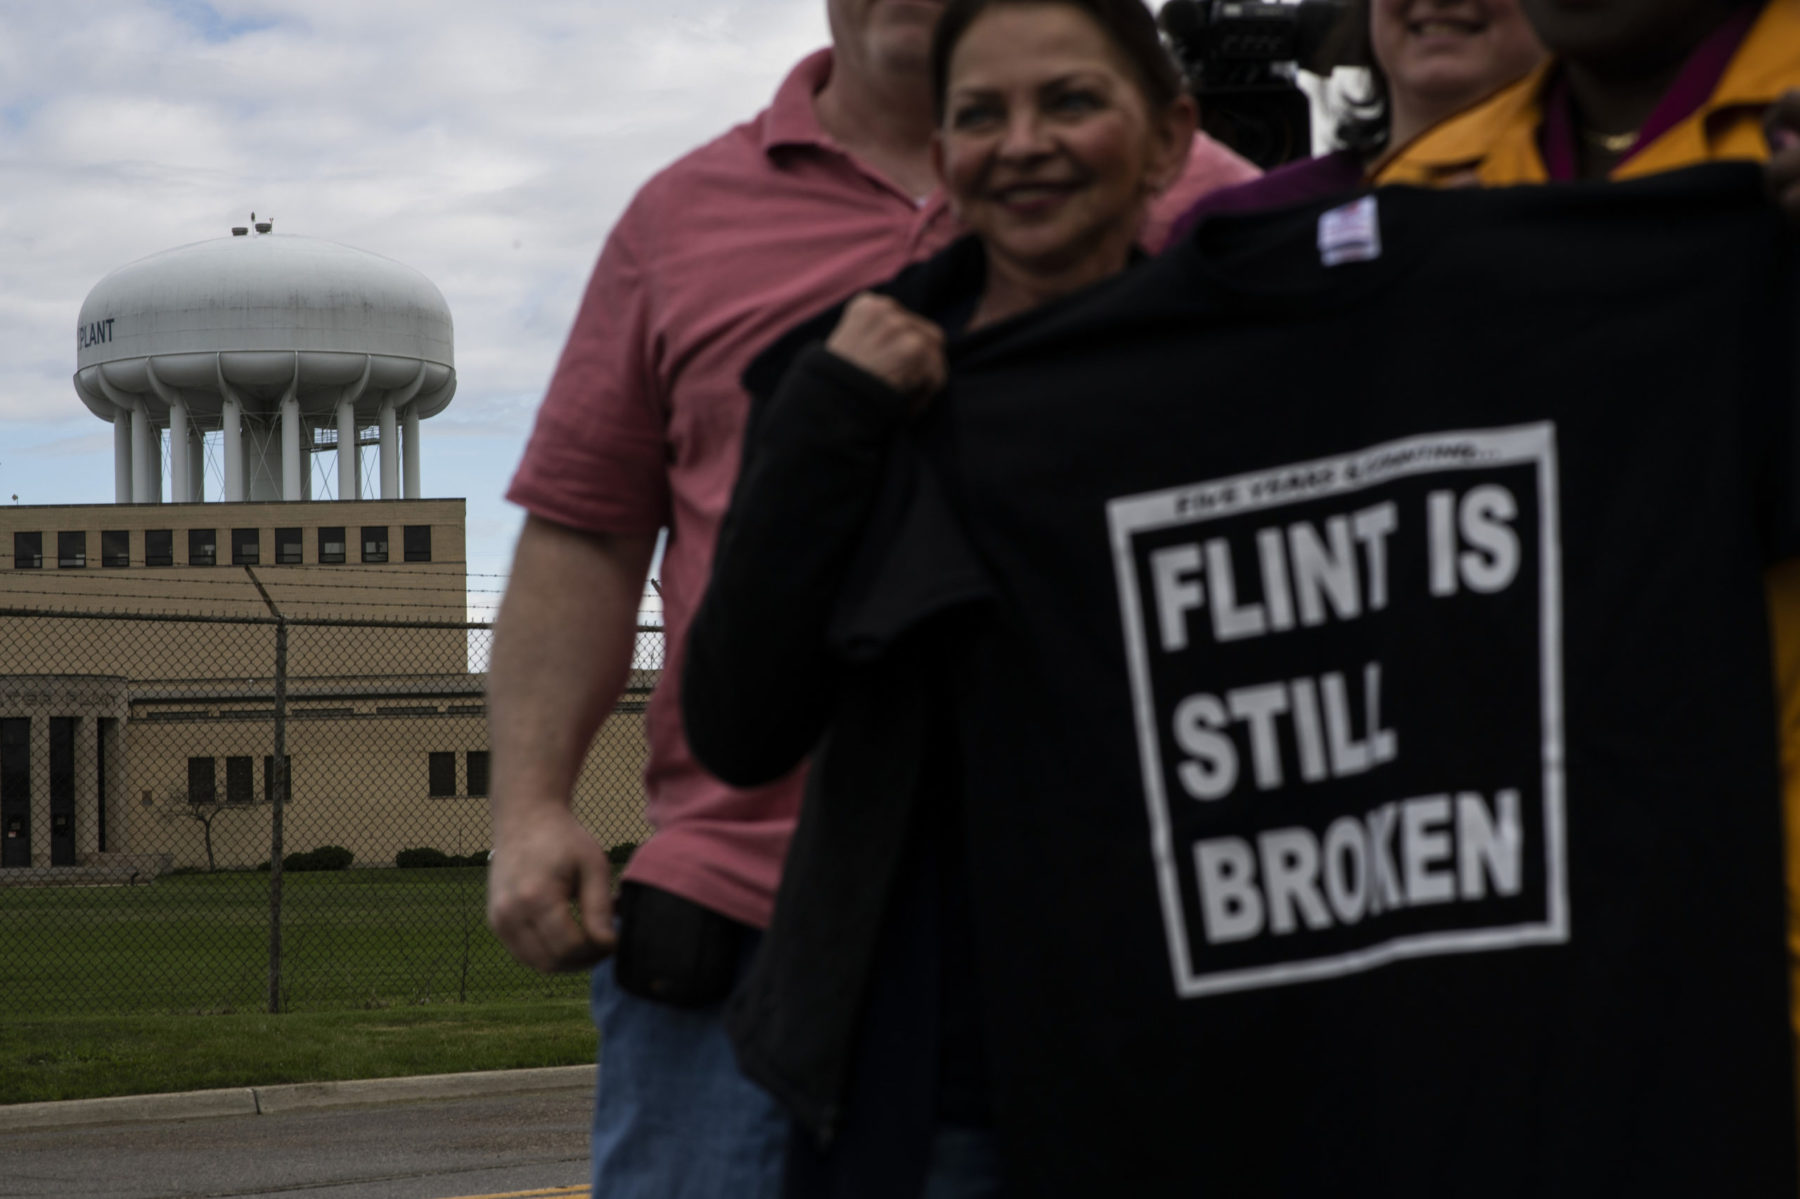 Closeup of person holding shirt saying 'Flint is still broken'